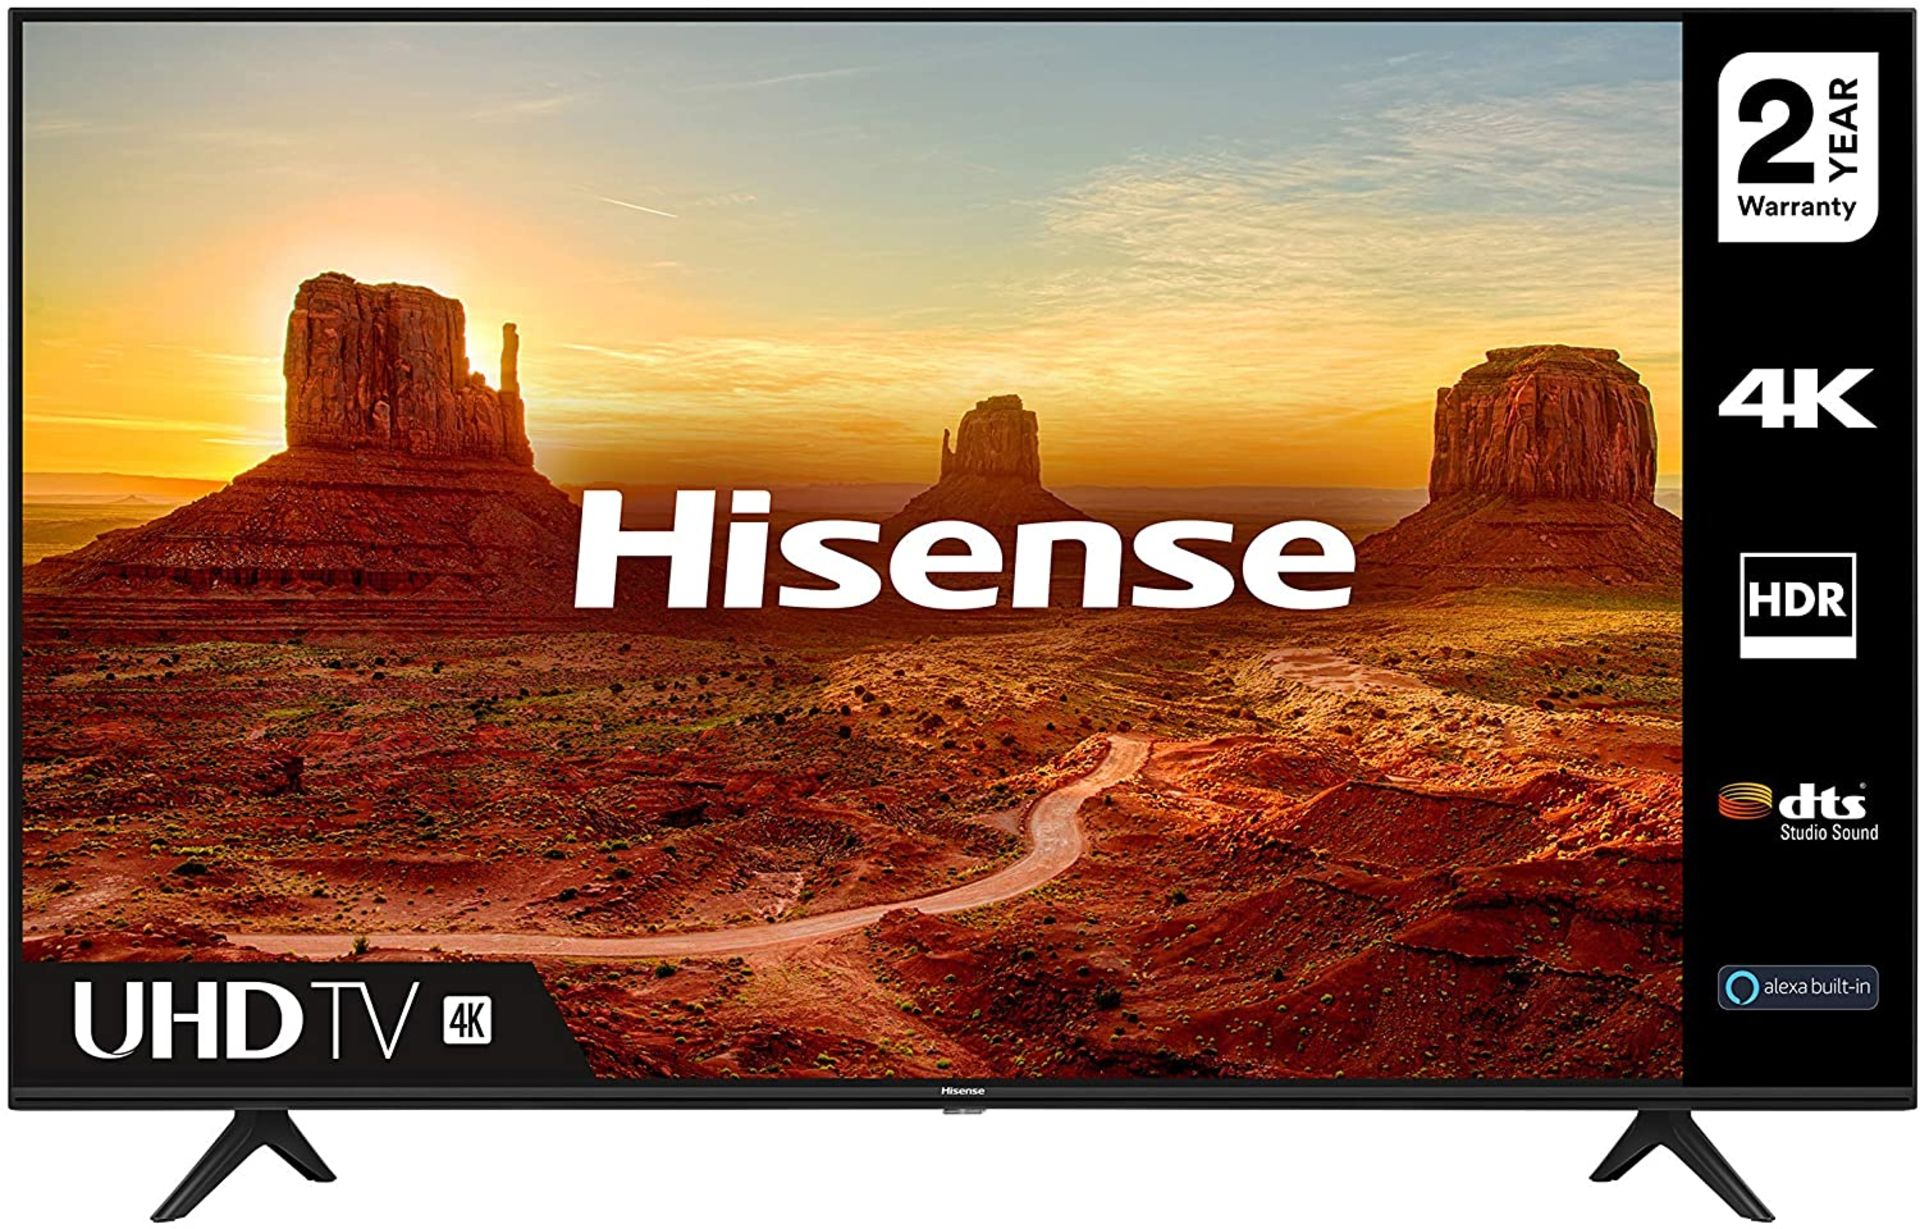 Hisense 43 Inch Smart 4K UHD HDR LED Freeview TV RPP £399